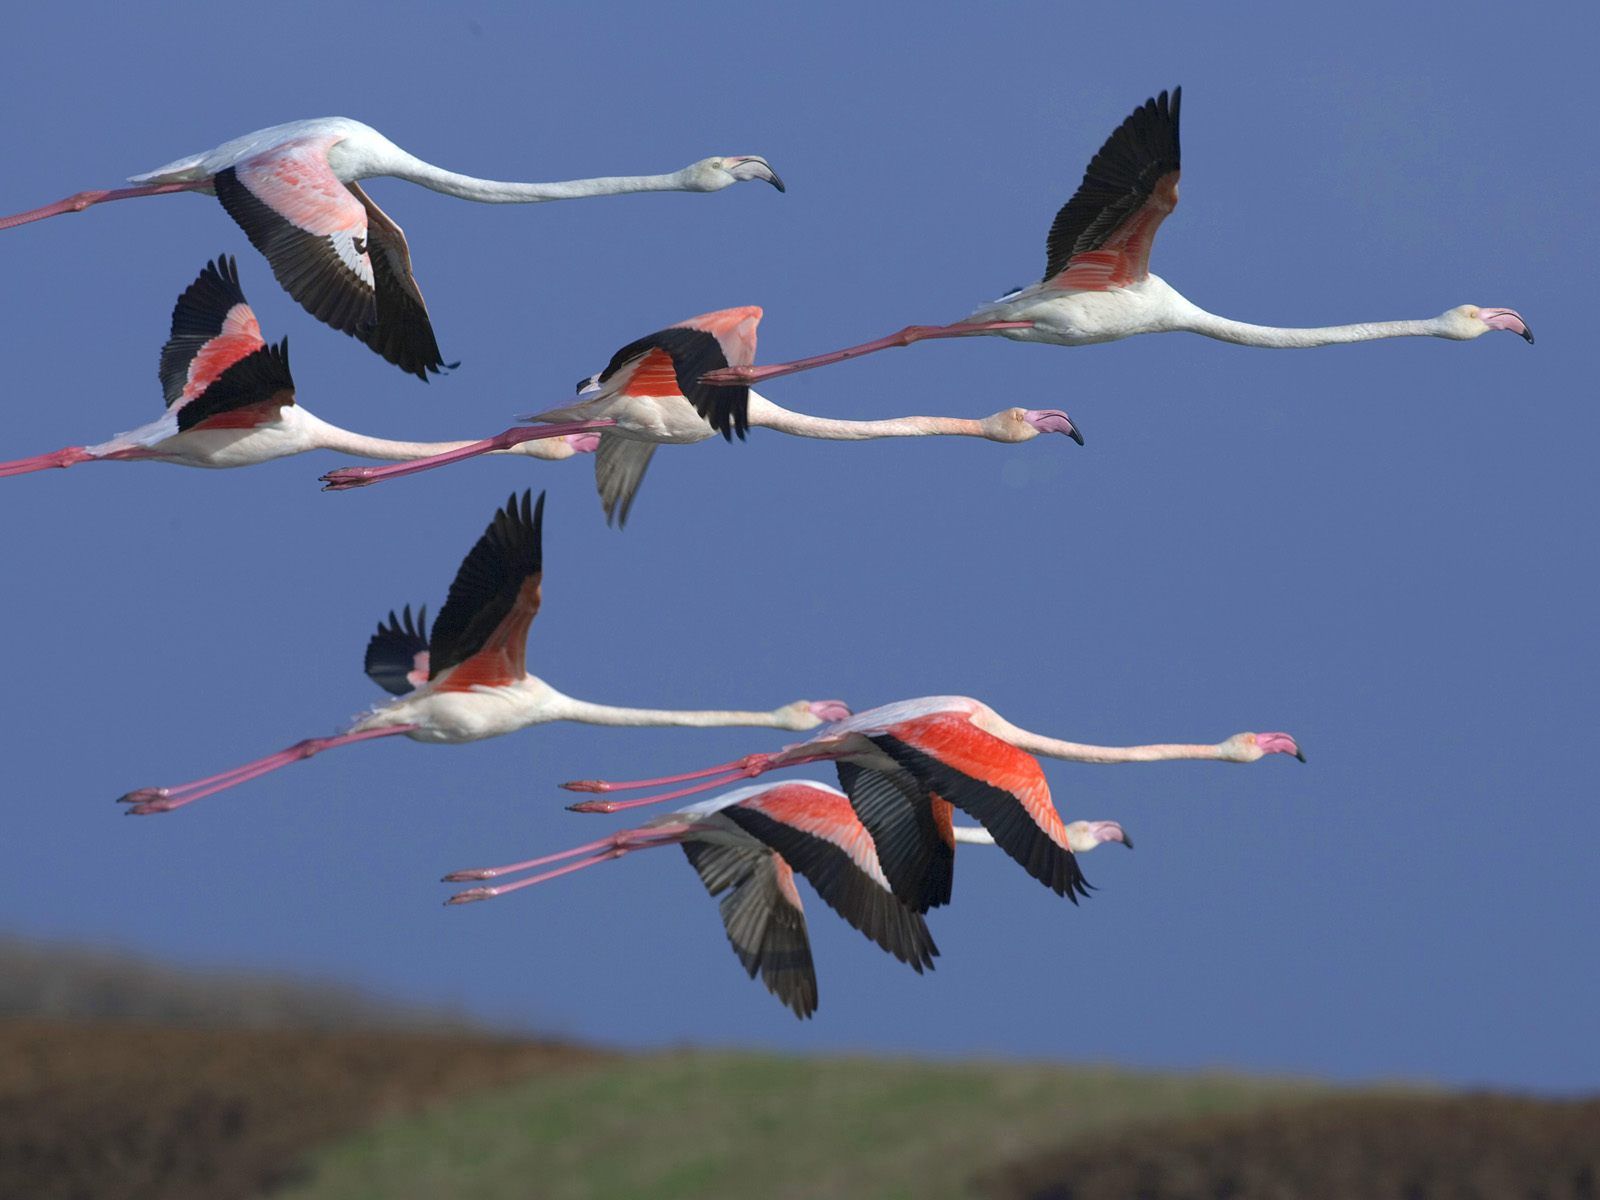 135108 Hintergrundbild herunterladen tiere, vögel, sky, flamingo, flug, herde - Bildschirmschoner und Bilder kostenlos